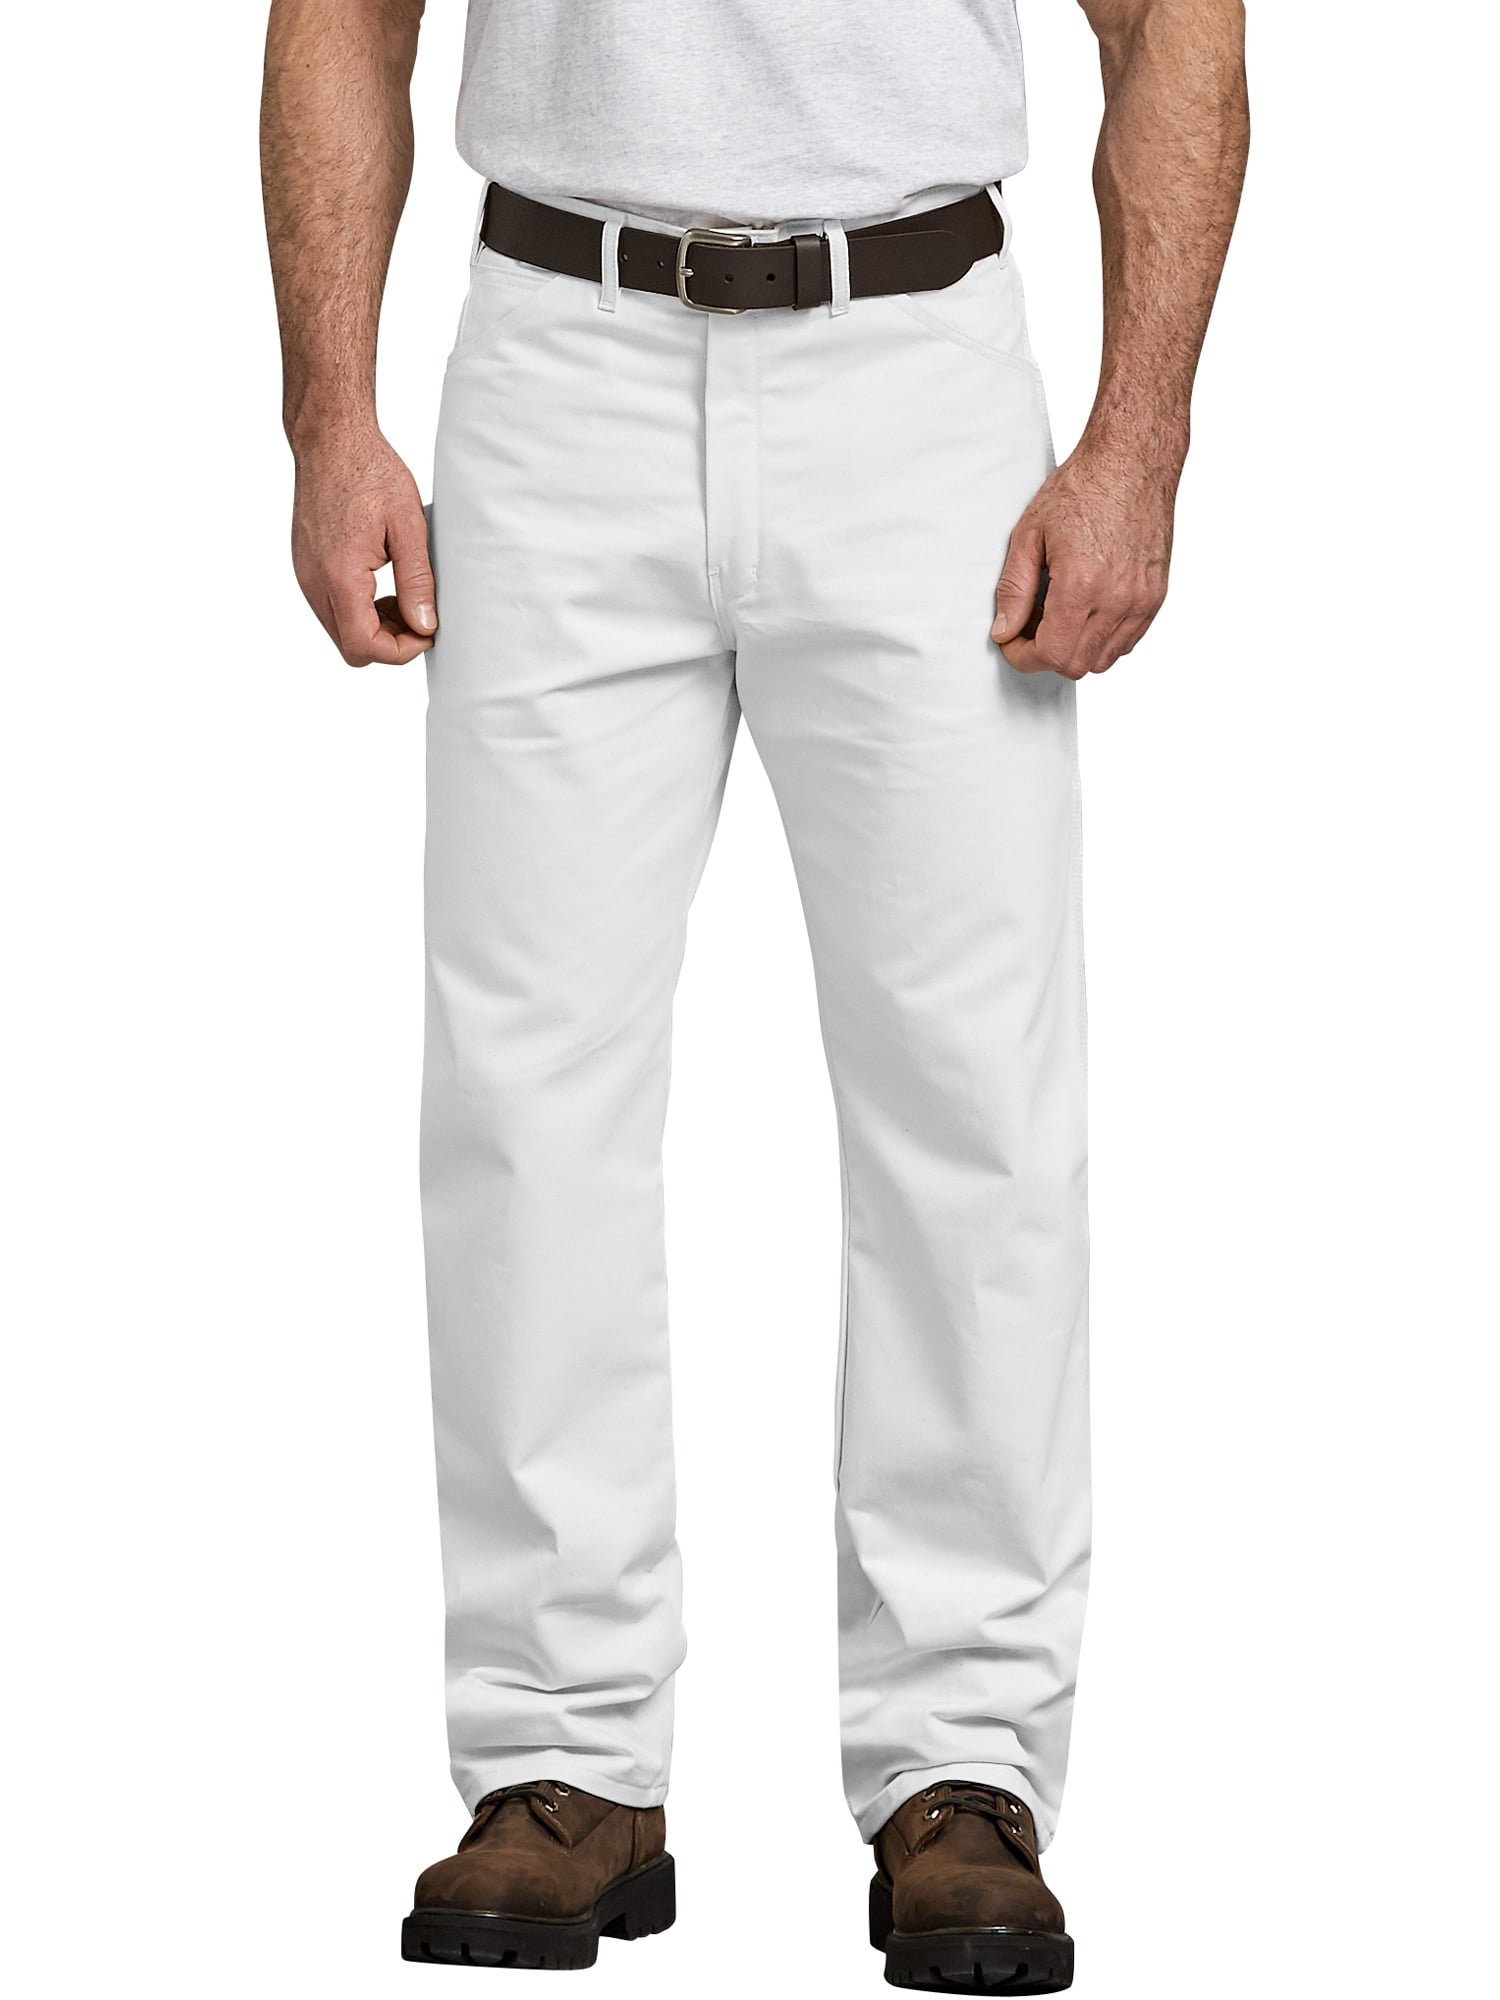 Men's ROYAL BLUE skinny twill pants blue grey white black red navy style 8183 